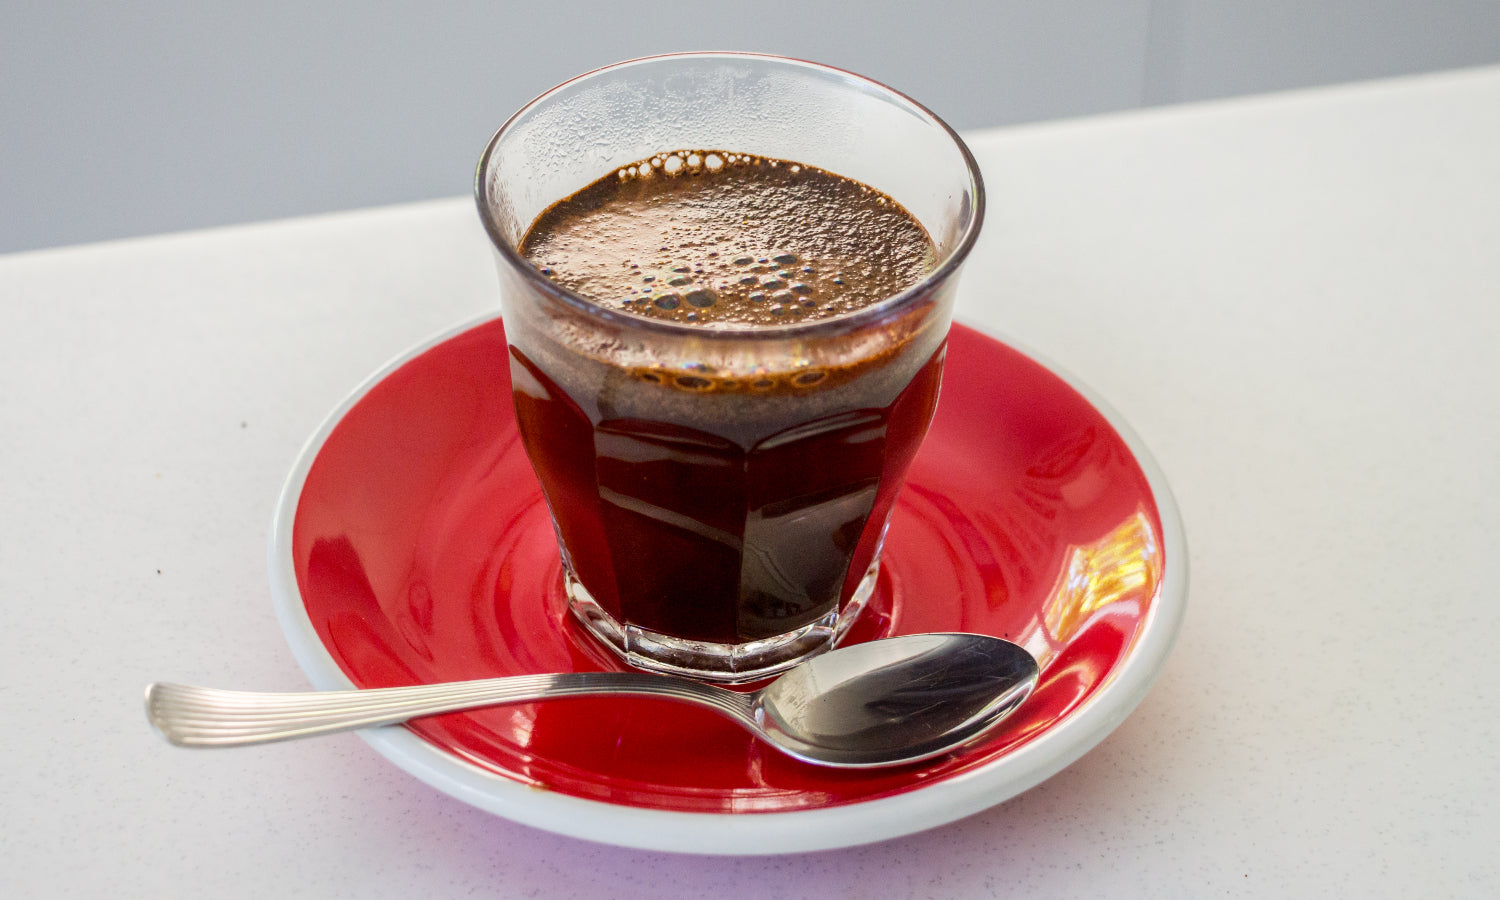 Brikka – Origem Specialty Coffee